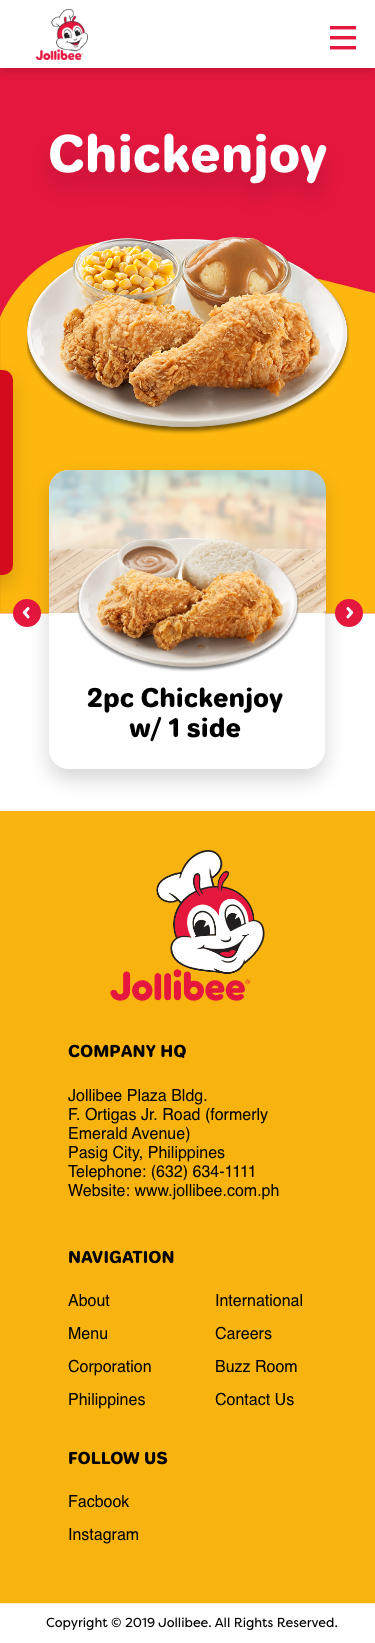 Chickenjoy-mobile